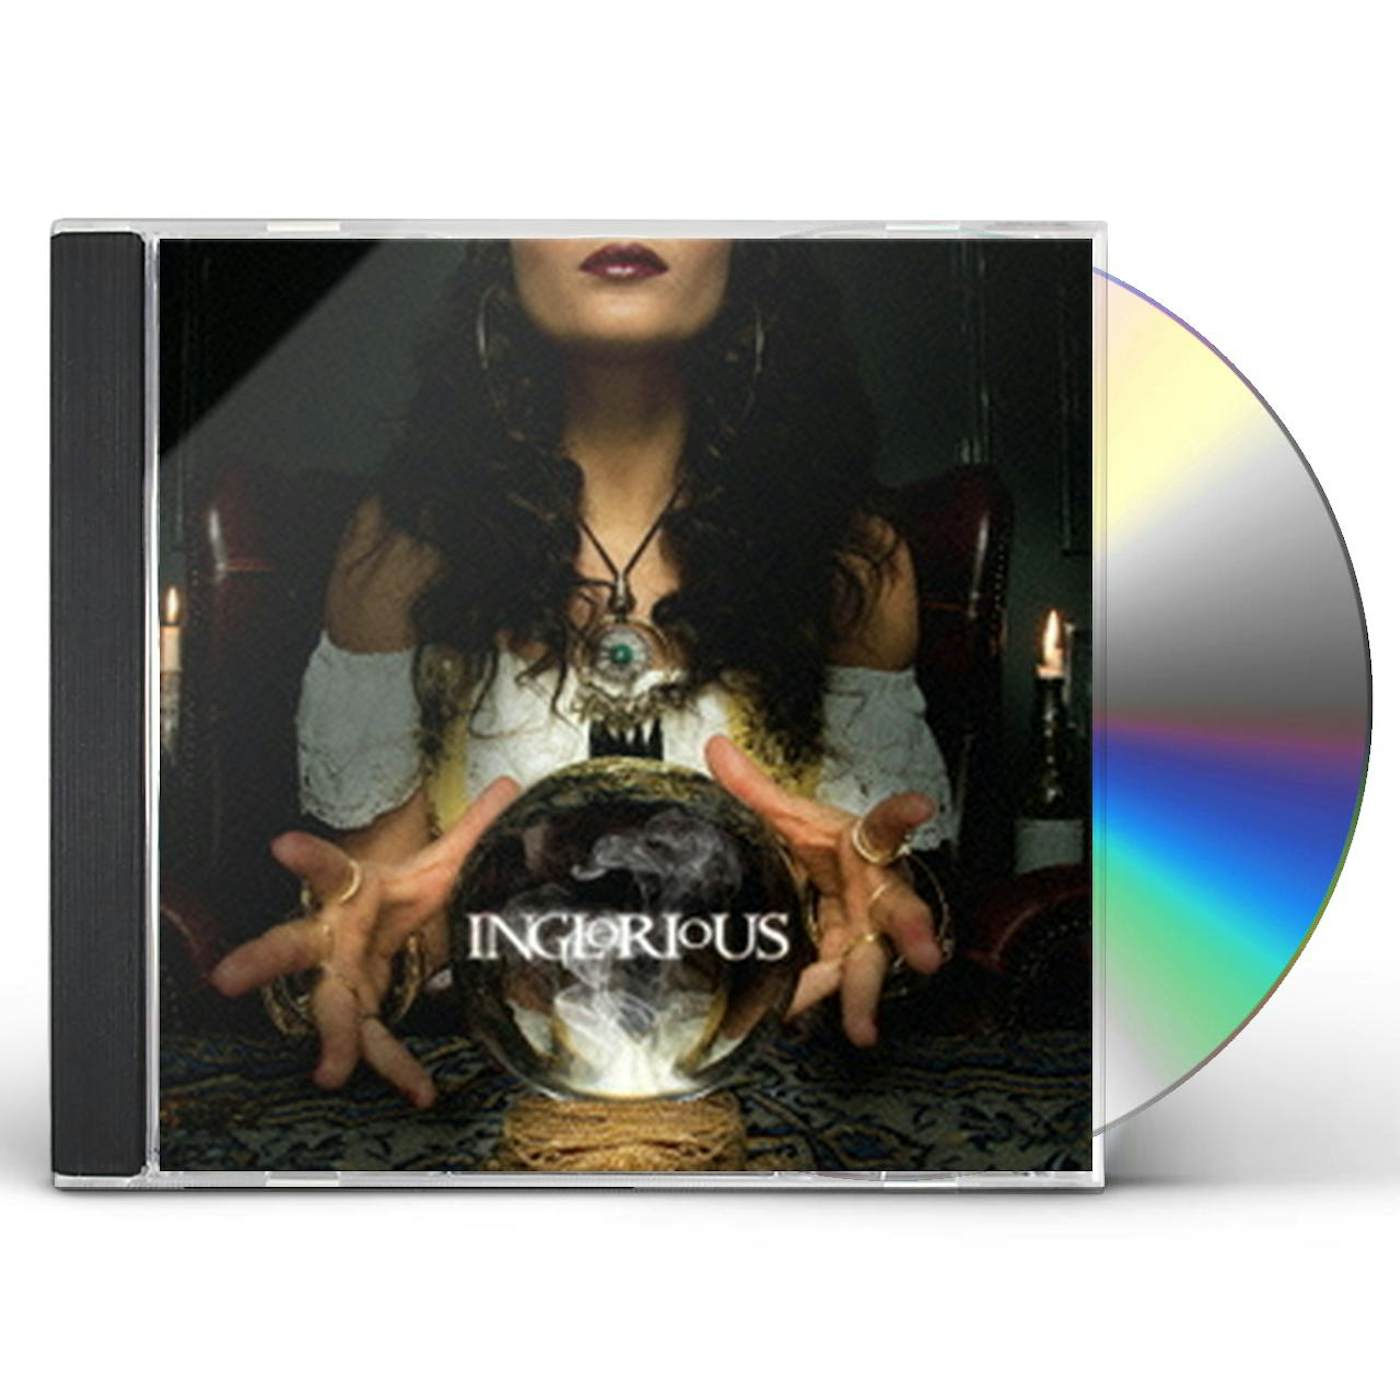 INGLORIOUS CD